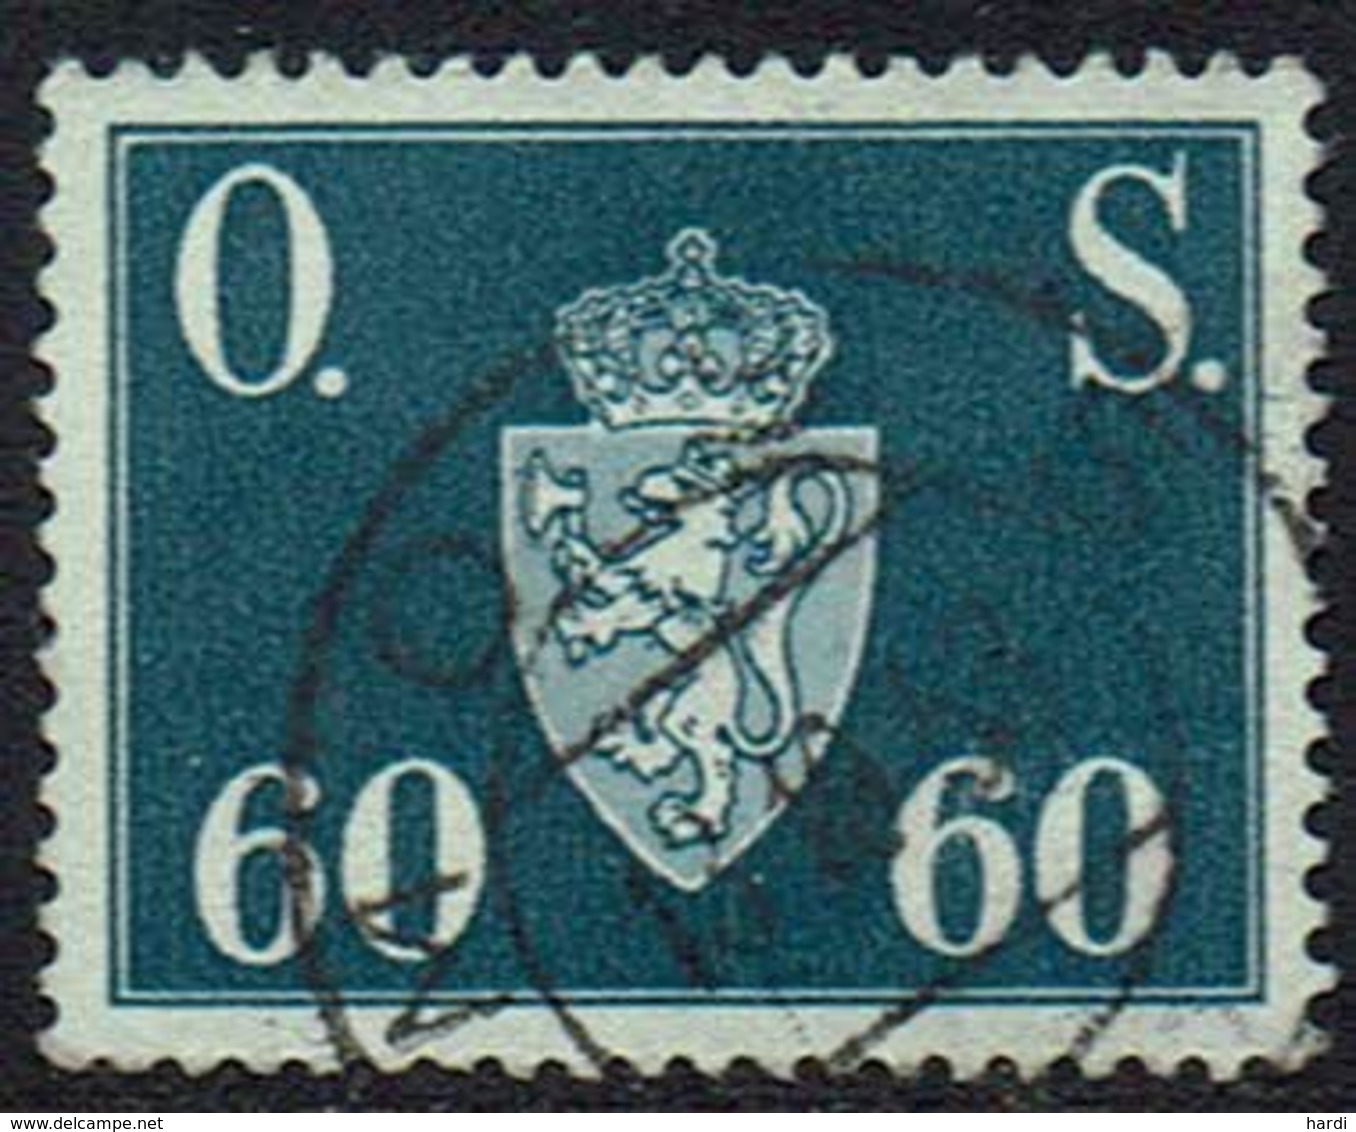 Norwegen DM, 1951, MiNr 66, Gestempelt - Service